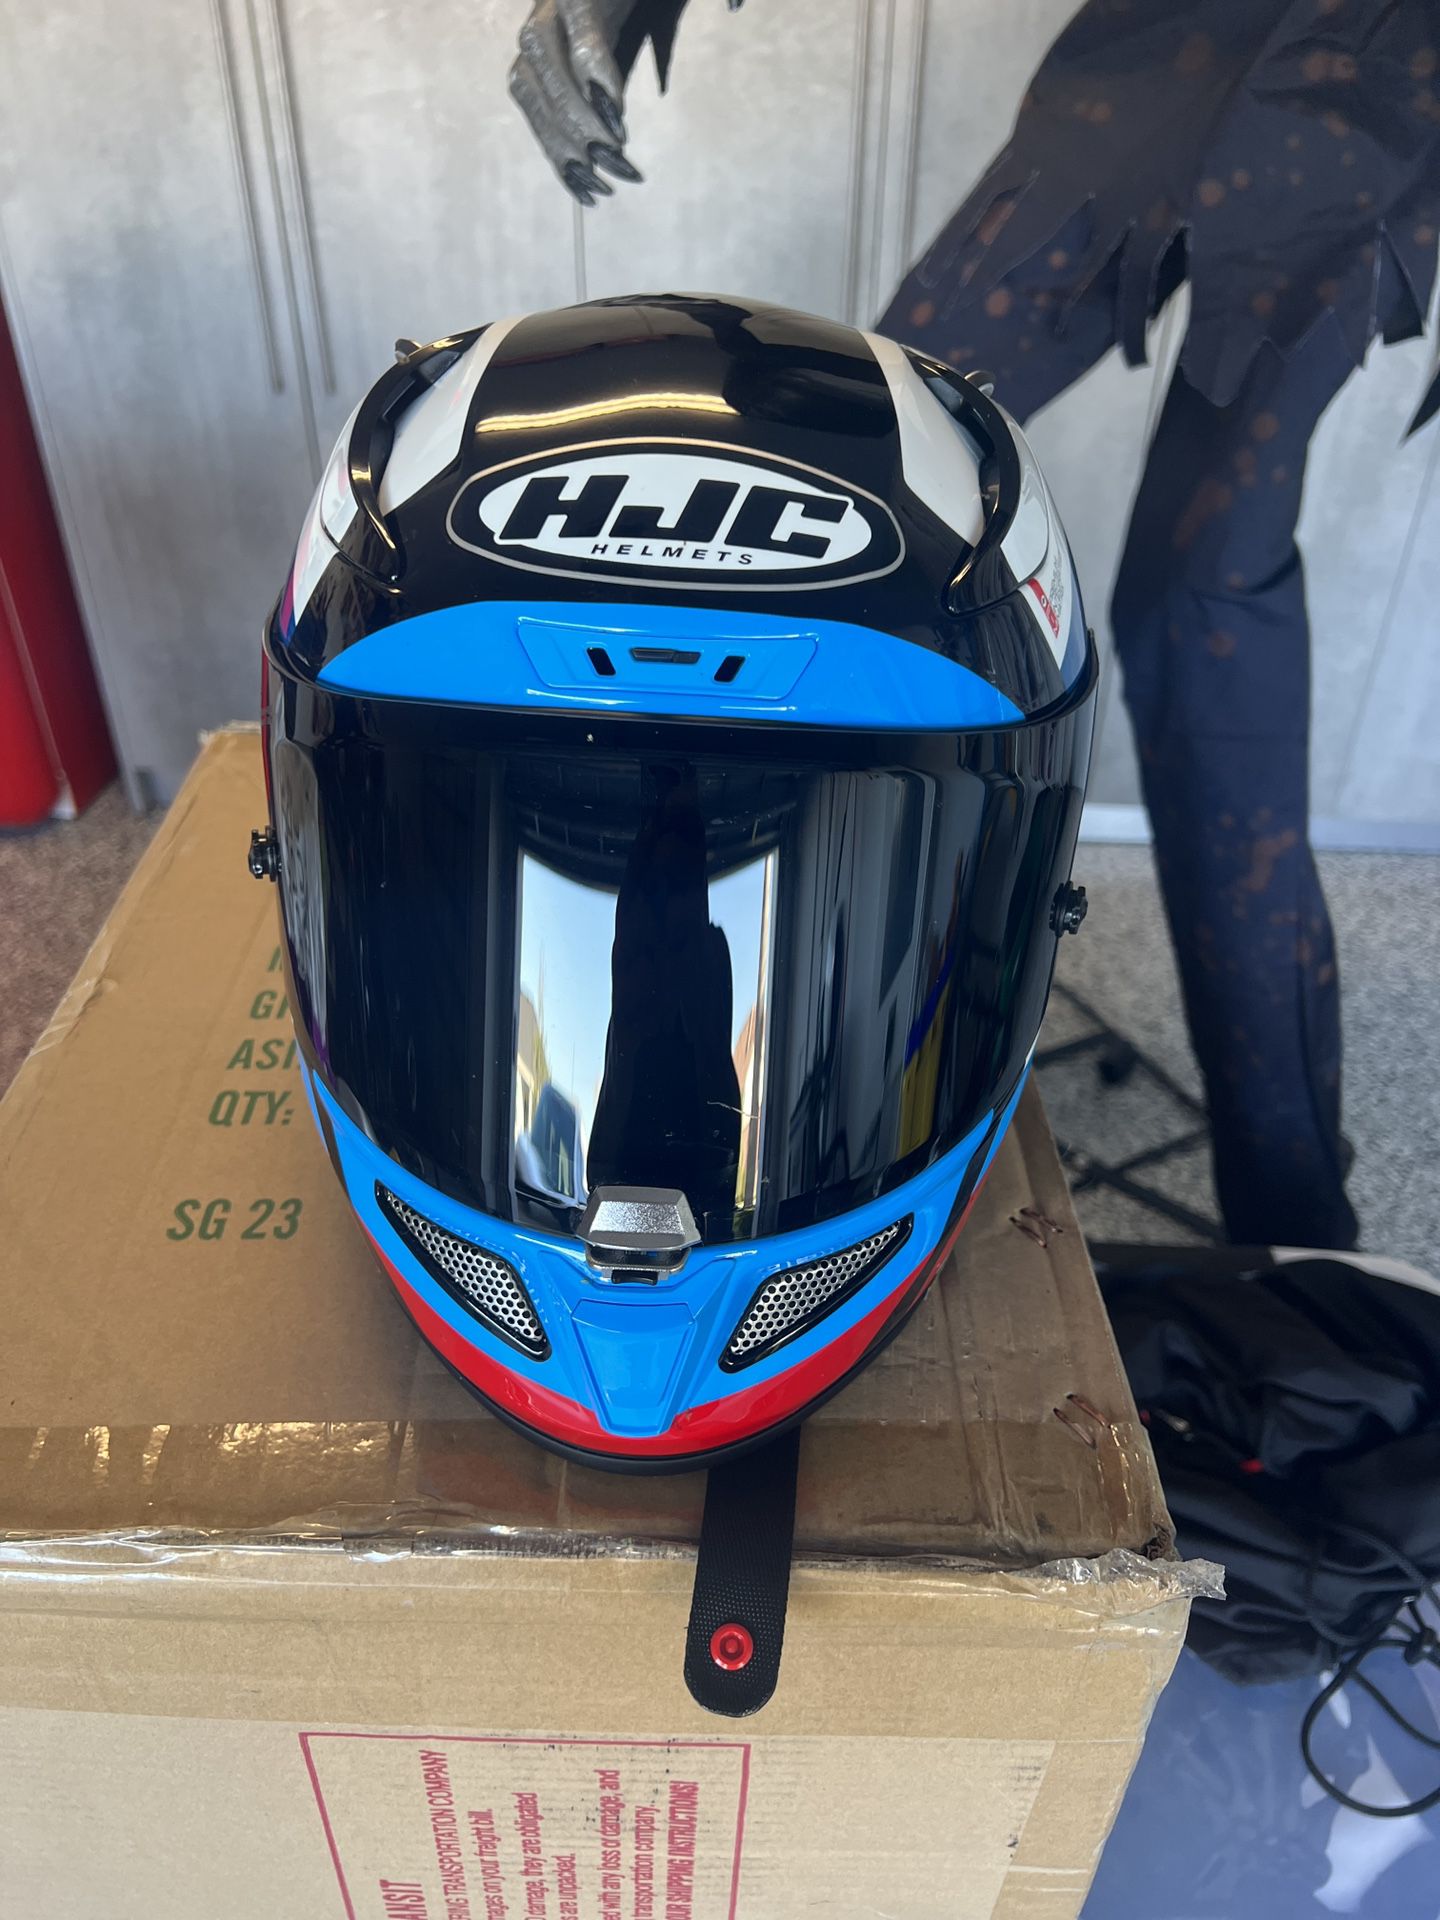 HJC Helmet 